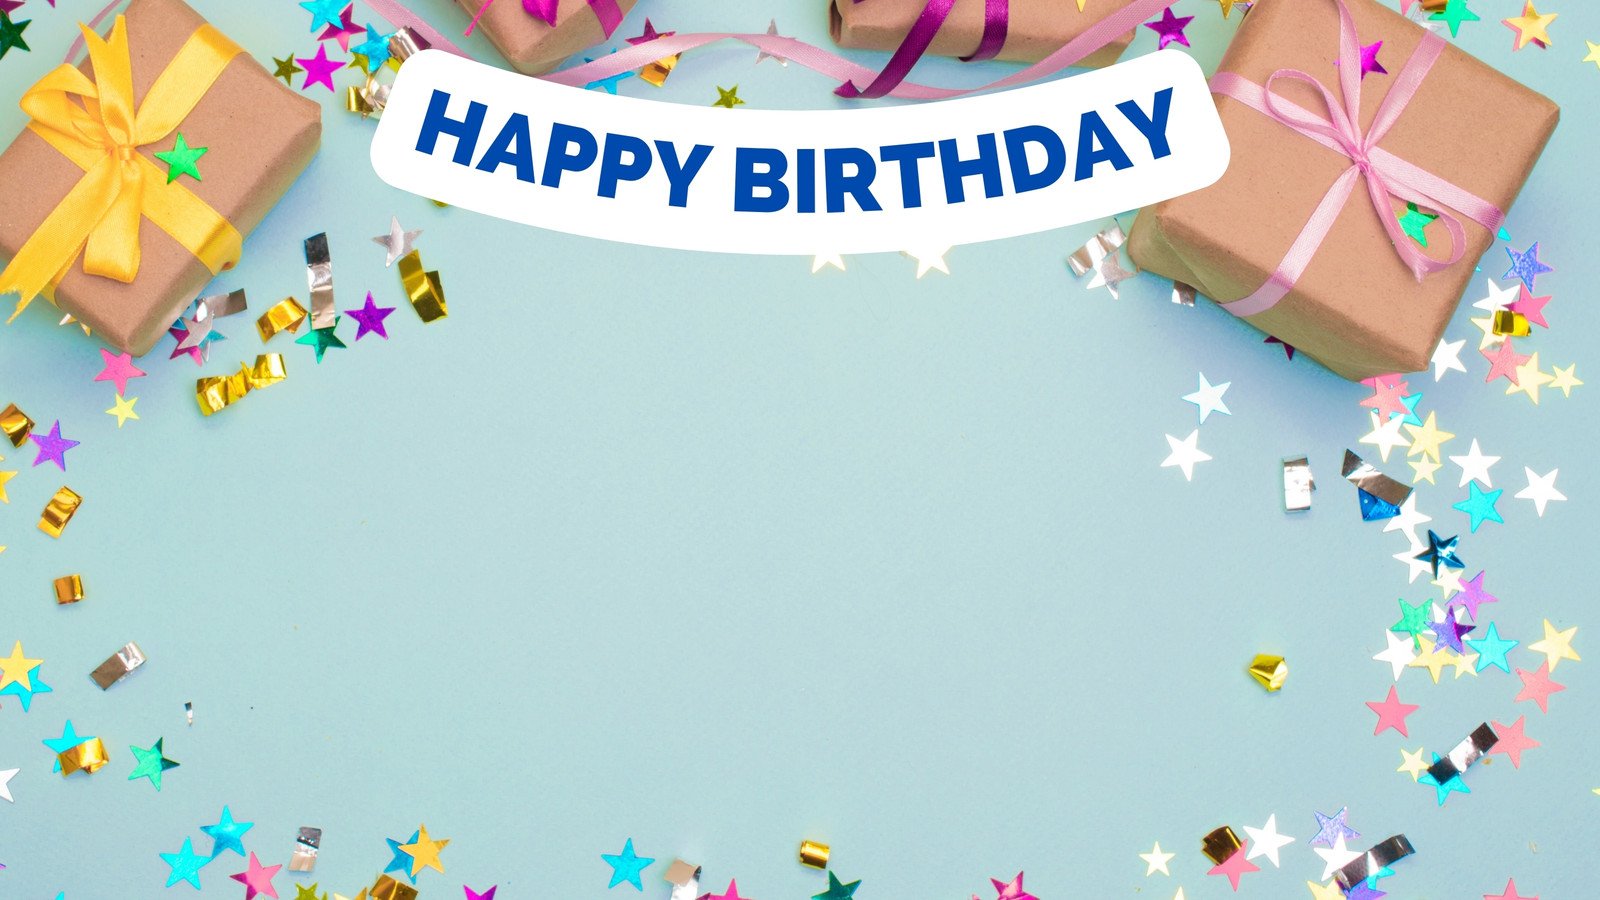 Happy Birthday background stock illustration Illustration of gifts   37238710